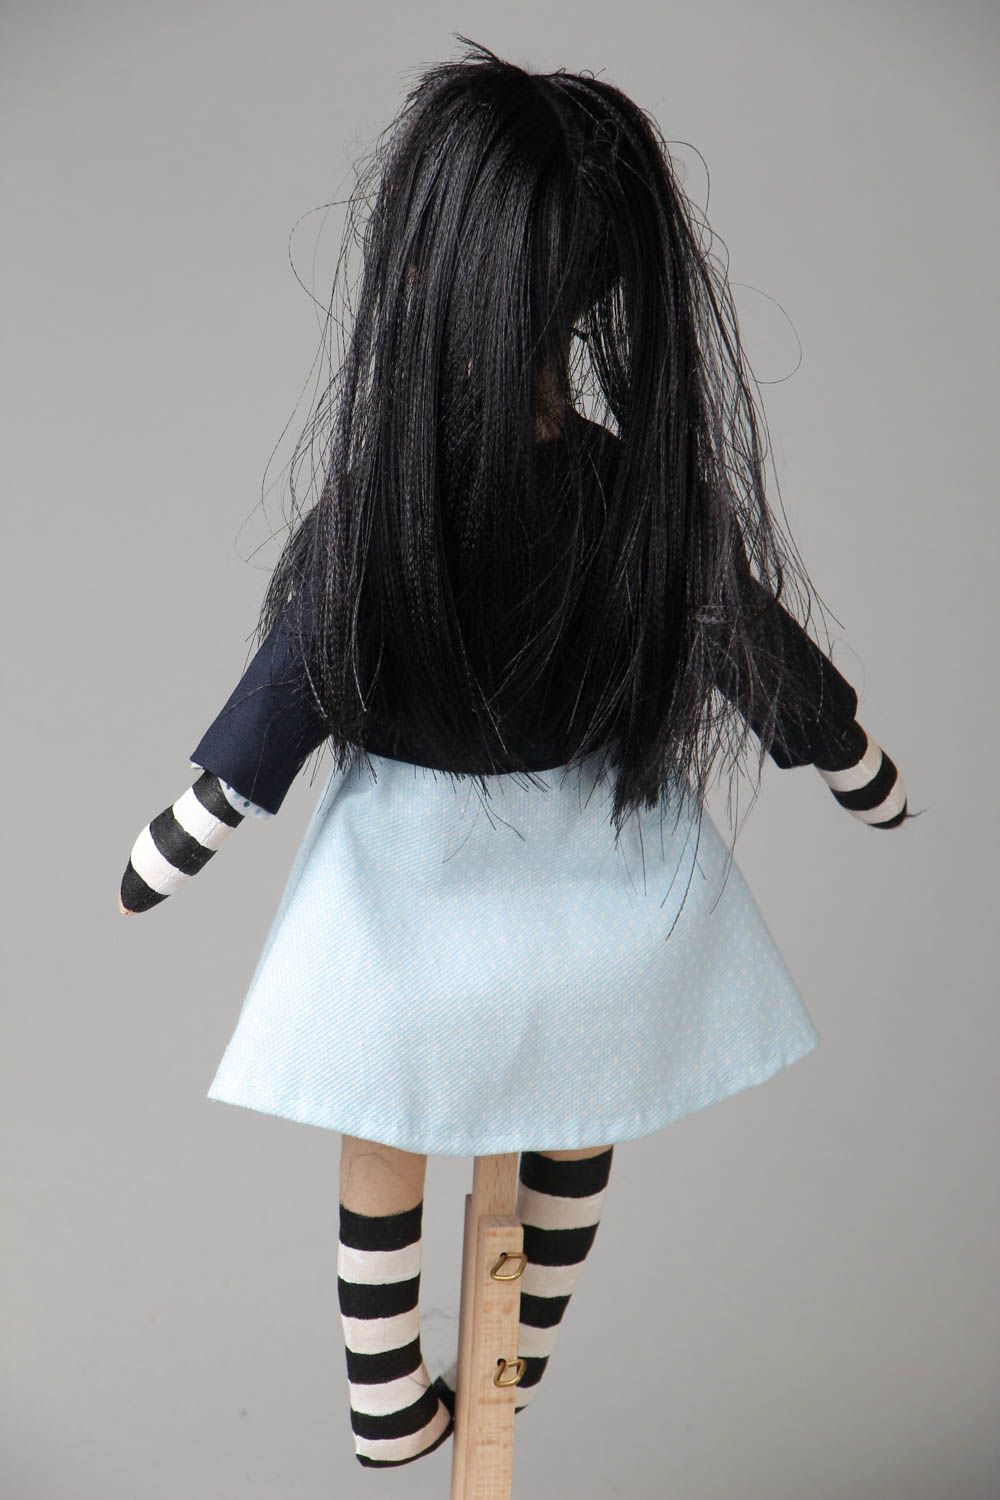 Designer doll with black hair photo 3